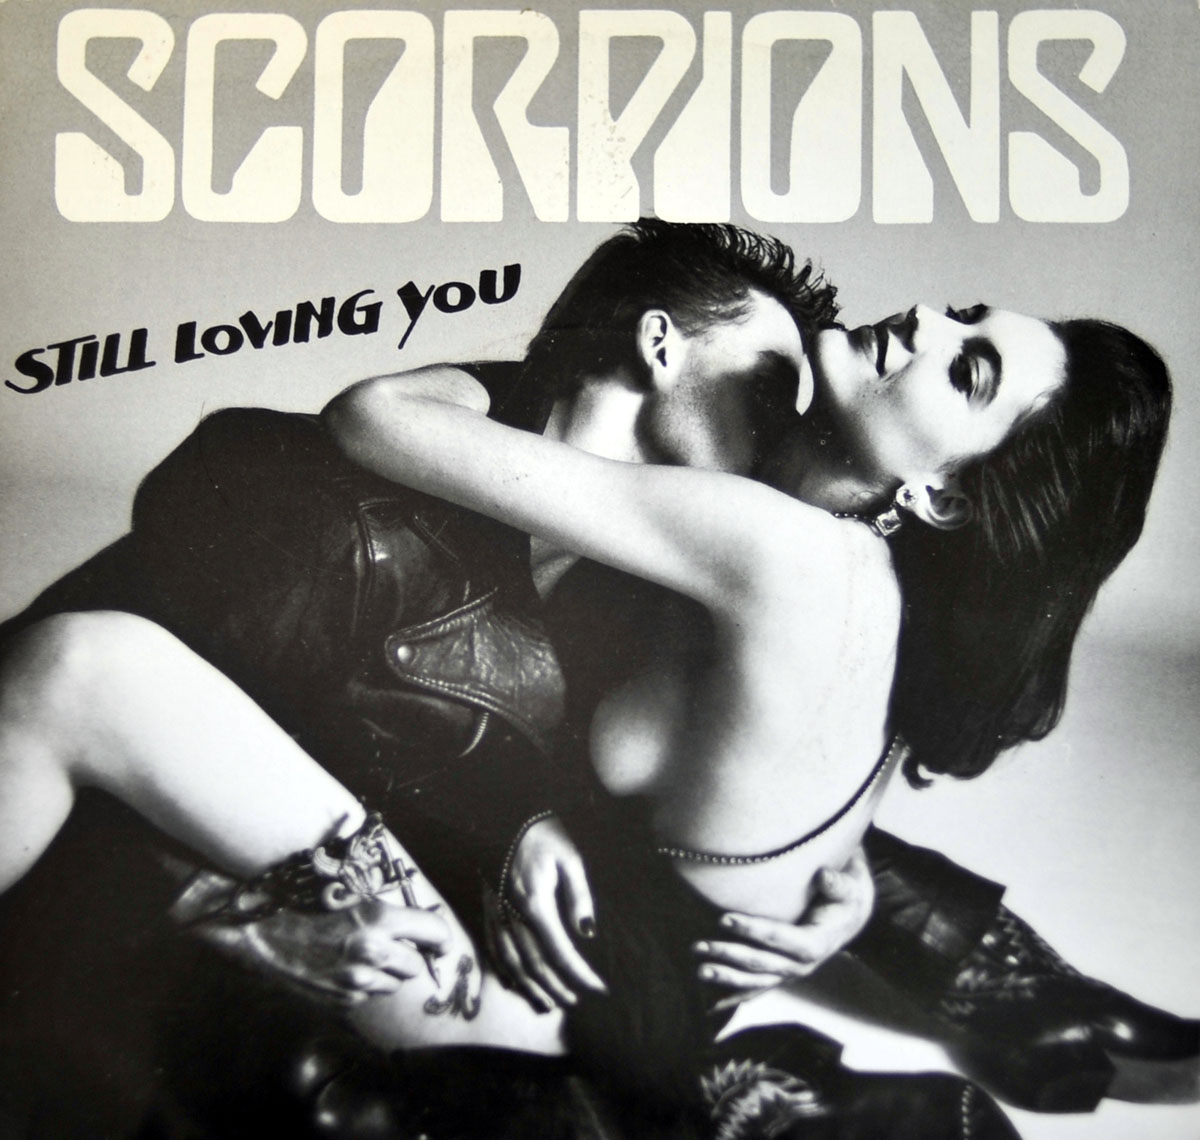 High Resolution Photos of scorpions still loving you single vinyl 